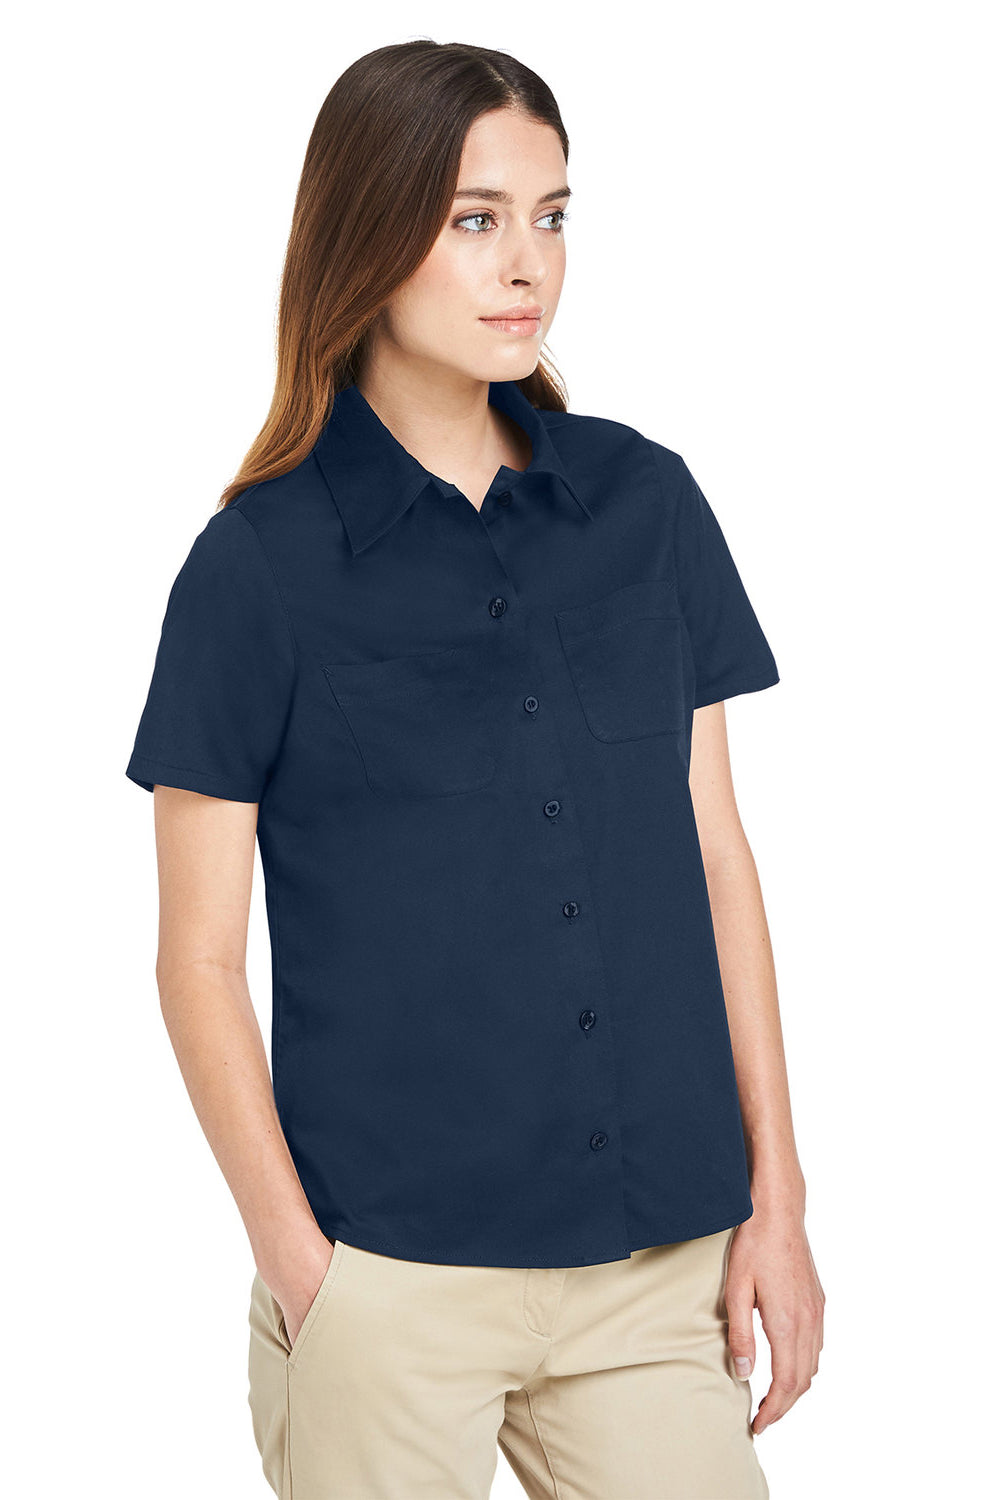 Harriton M585W Womens Advantage Short Sleeve Button Down Shirt w/ Double Pockets Dark Navy Blue 3Q